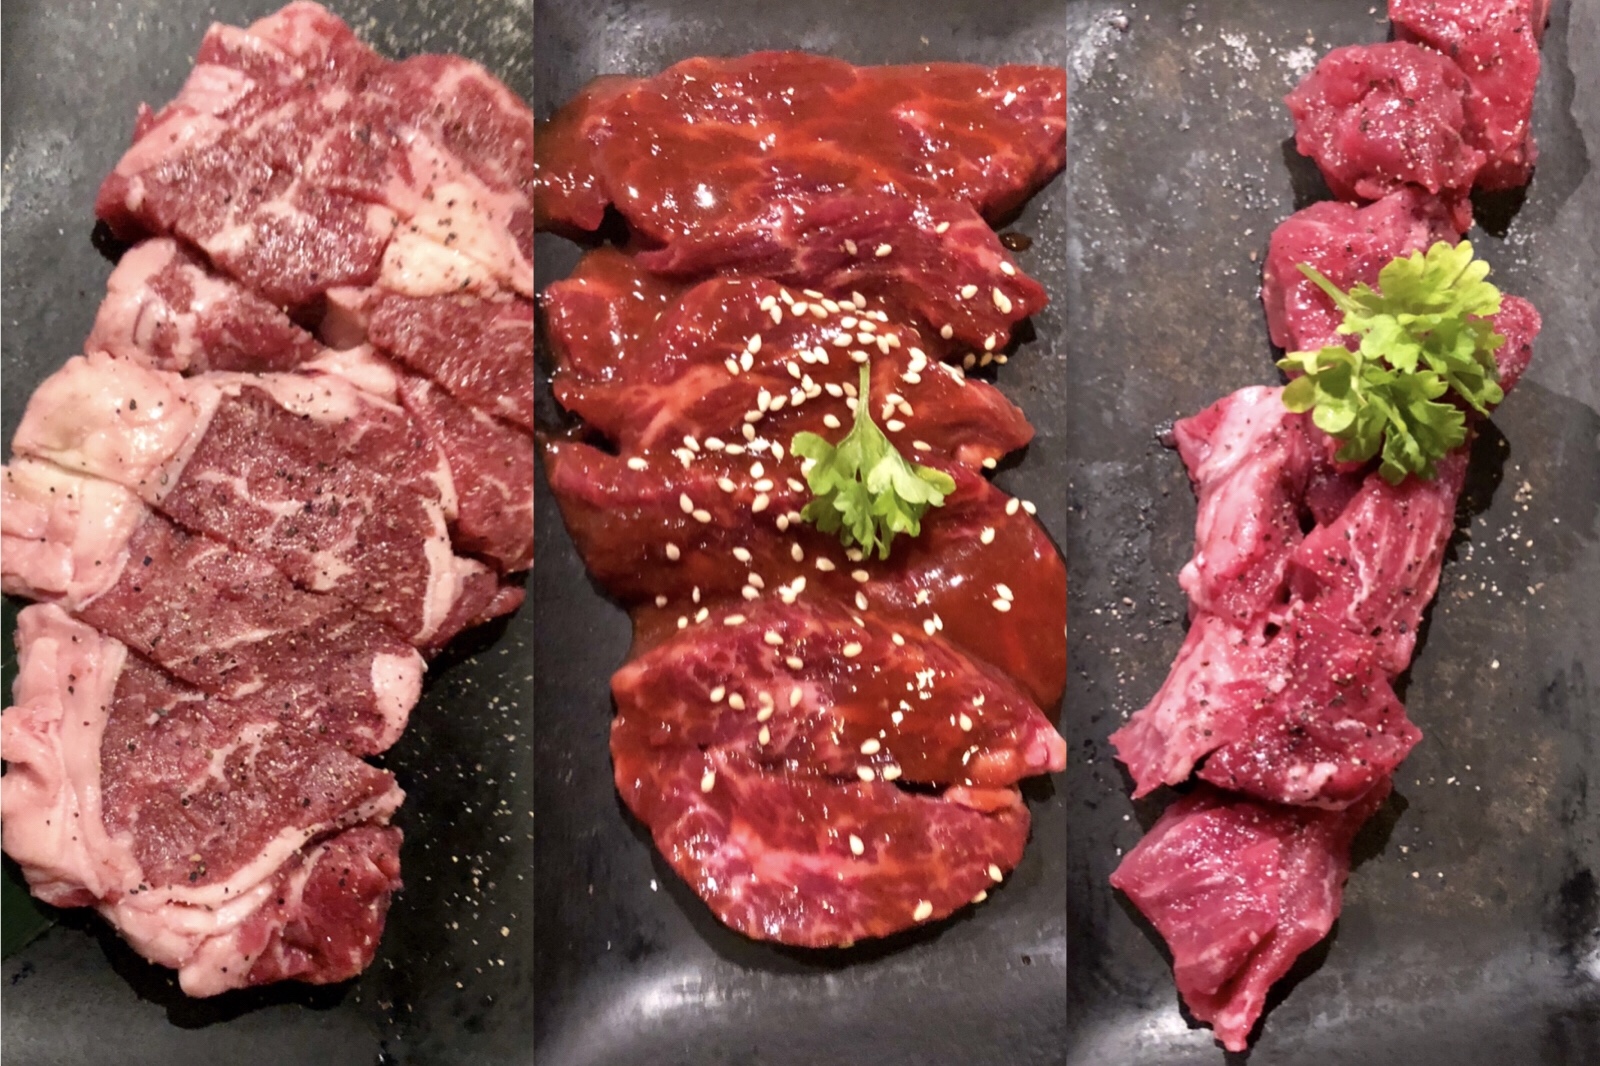 Left to Right: Premium Ribeye Steak, Bistro Hanger Steak with Miso, and Filet Mignon with Salt & Pepper